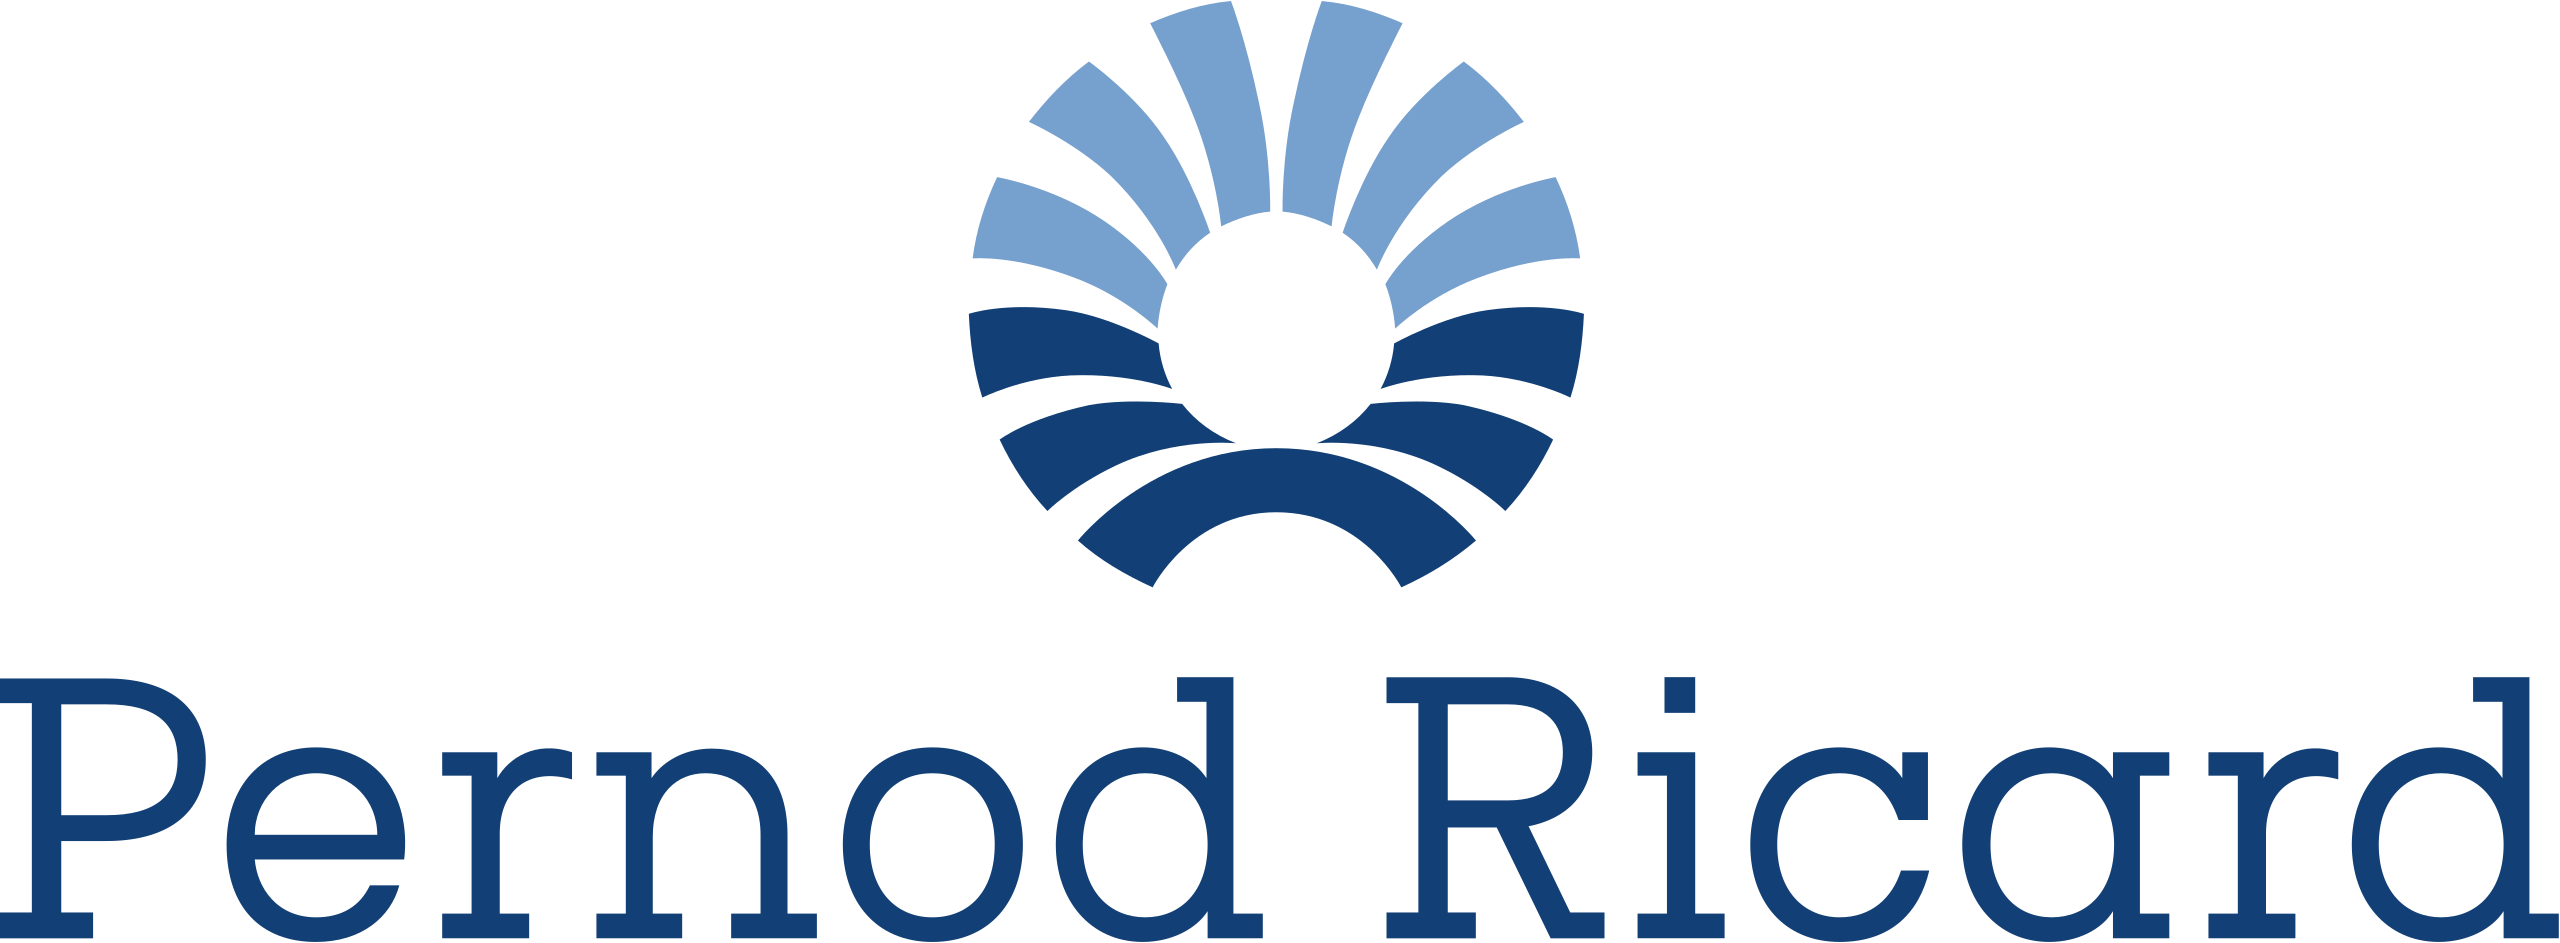 Client Logo Pernod Ricard